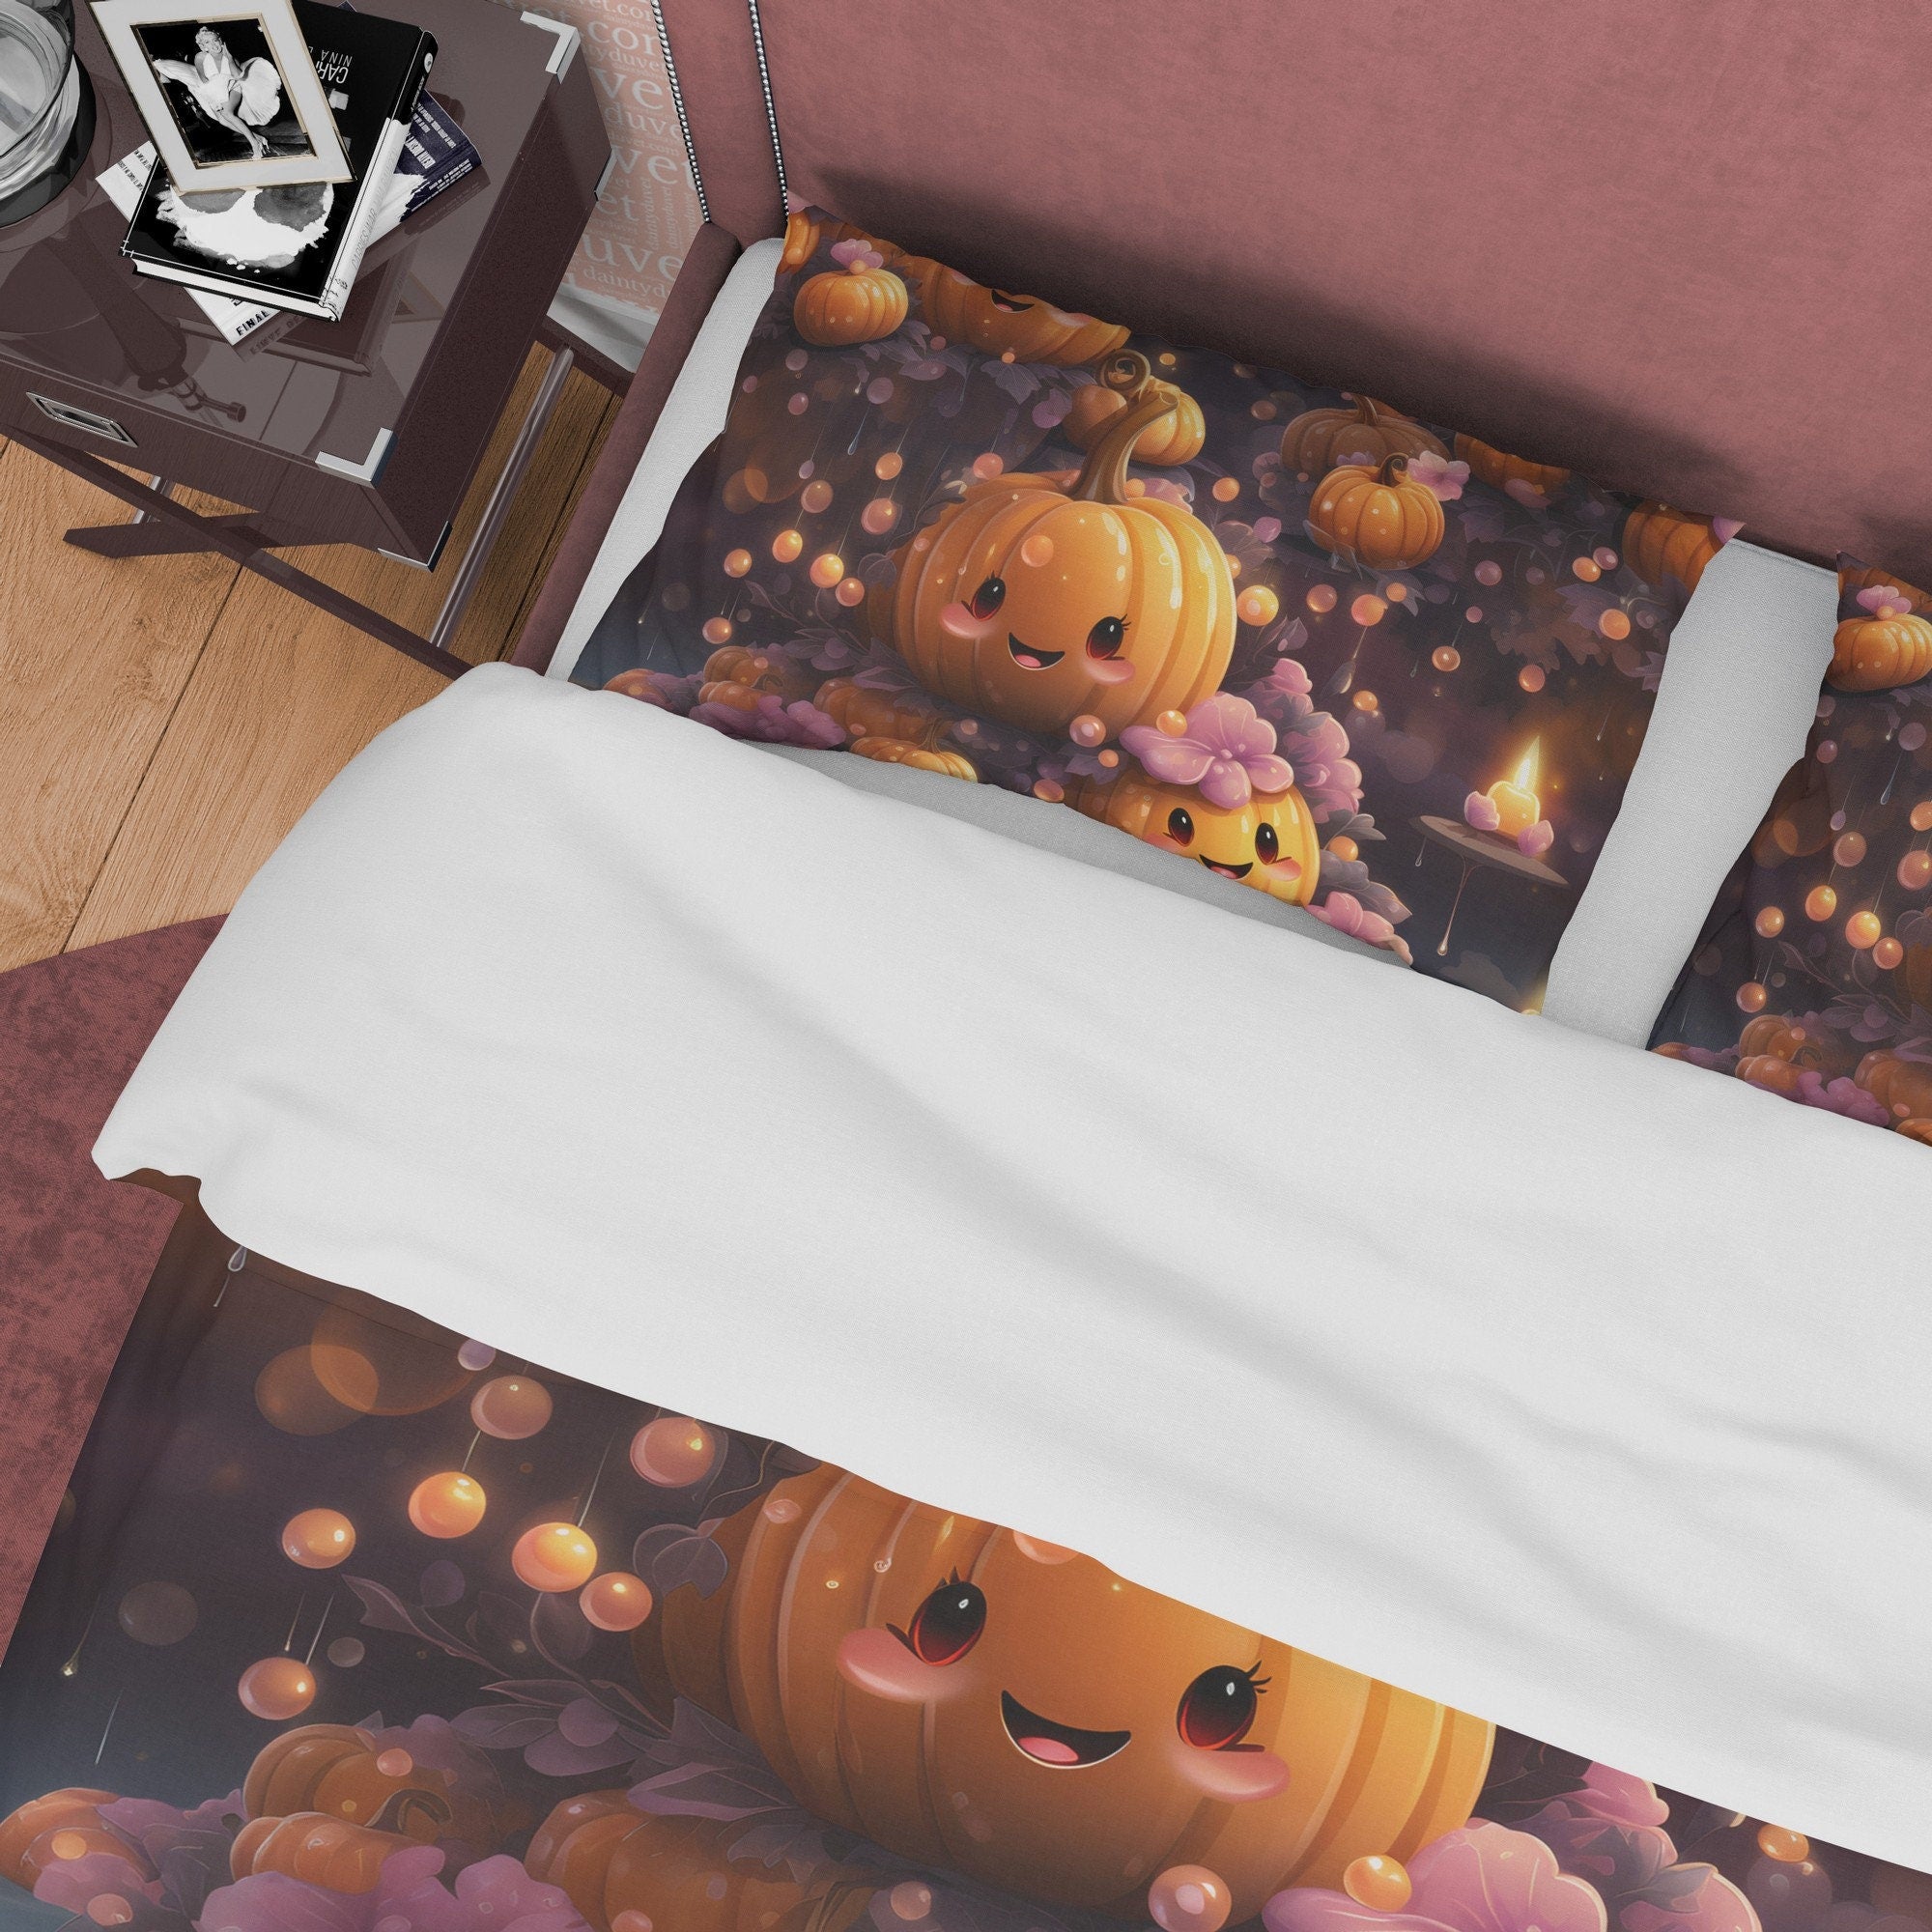 Cute Pumpkin Duvet Cover Set, Spooky Bedding, Mom and Child, Halloween Room Decor, Autumn Quilt Cover, Kawaii Japanese Bedspread